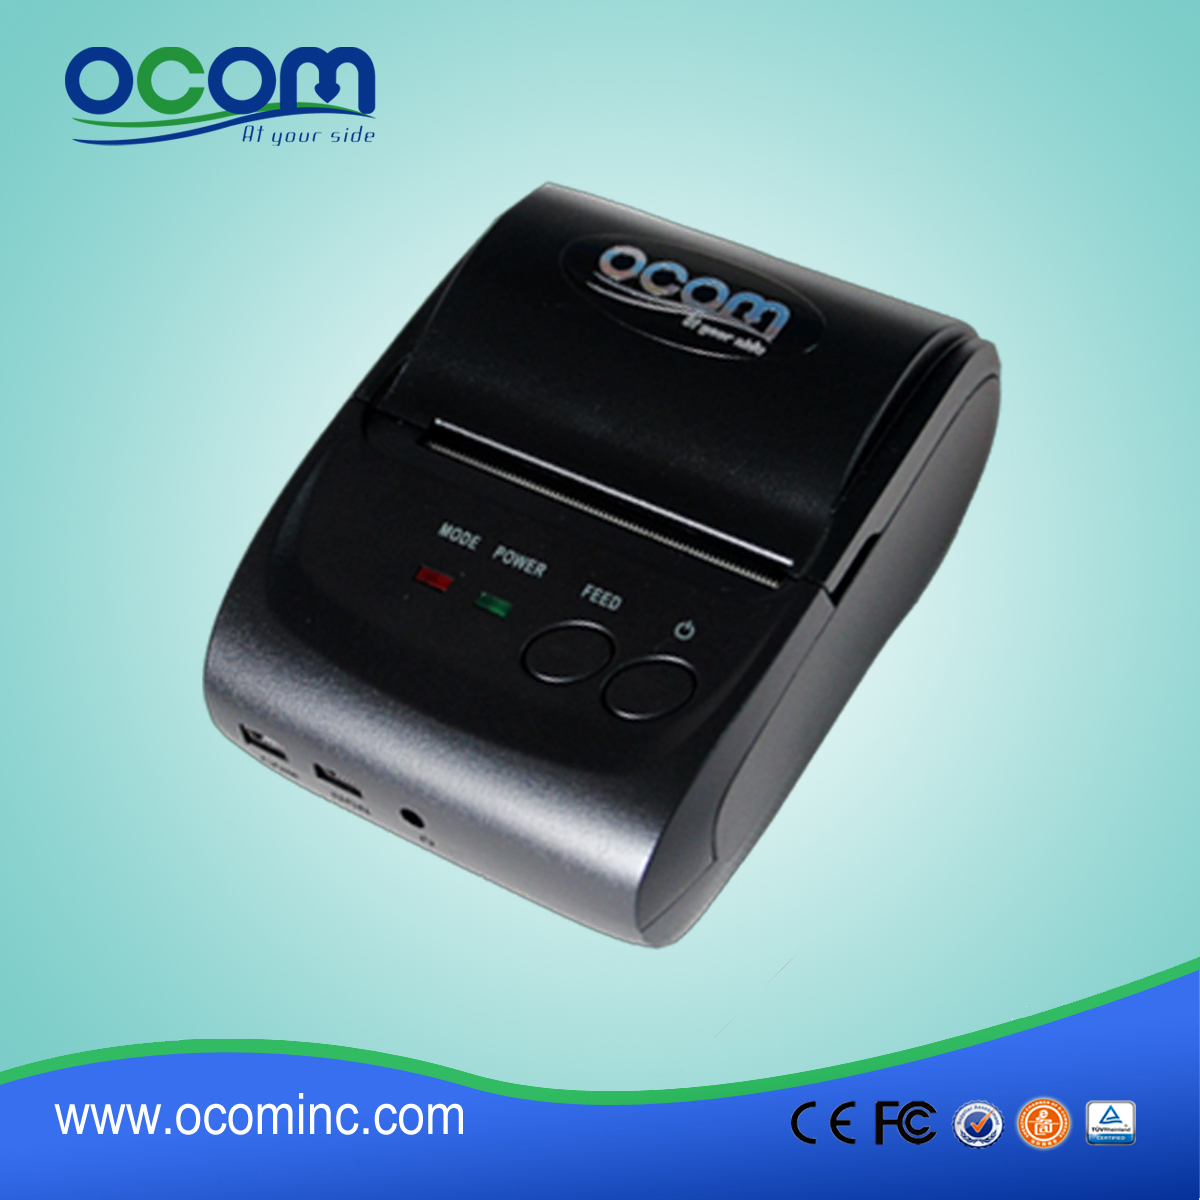 OCPP-M05: 2015 υψηλής ποιότητας θερμικό εκτυπωτή bluetooth αγορά εκδίδεται απόδειξη αγοράς